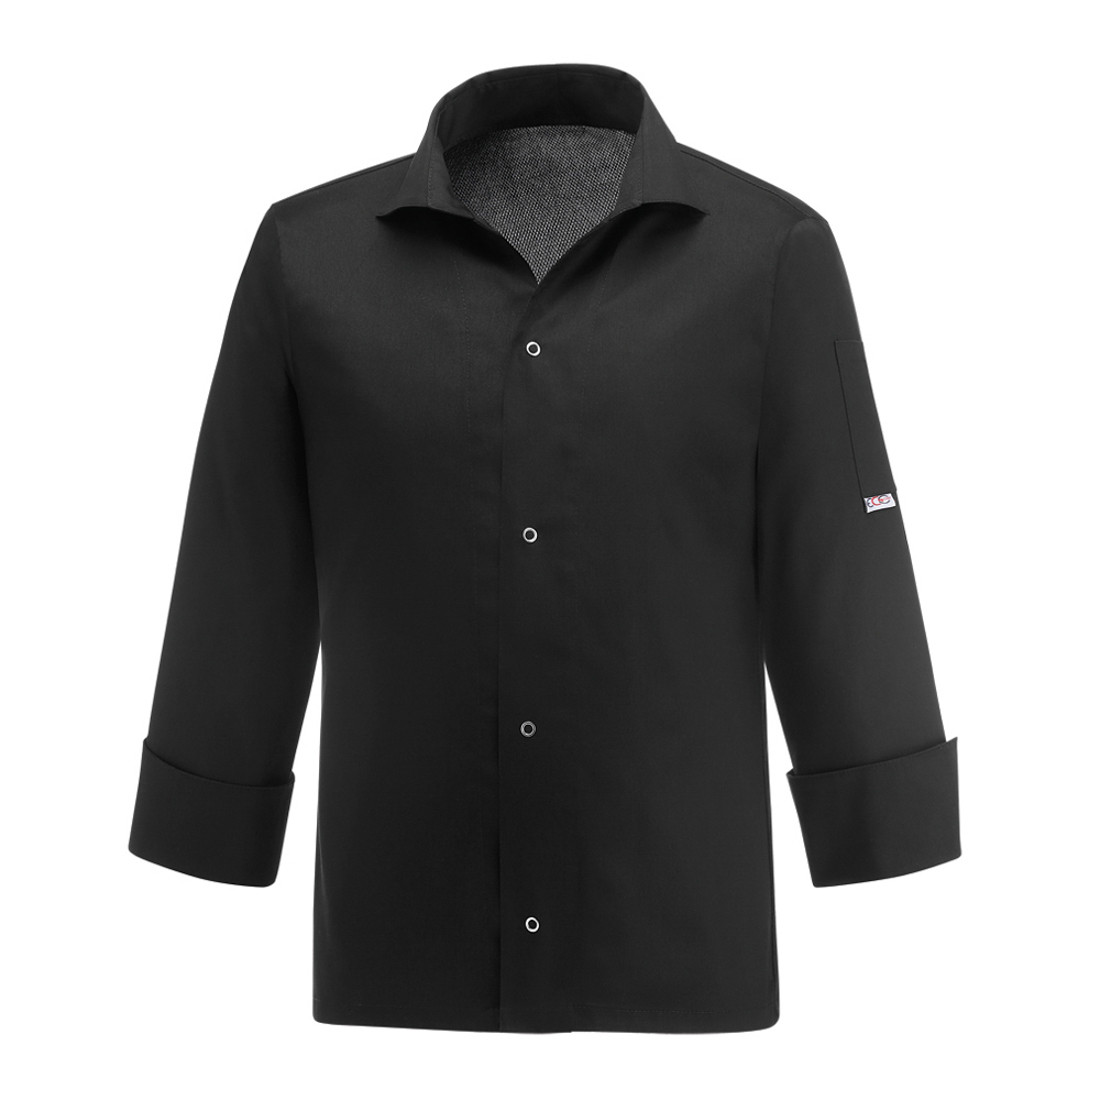 Vip Chef's Jacket, 65% polyester/35% cotton - Safetywear